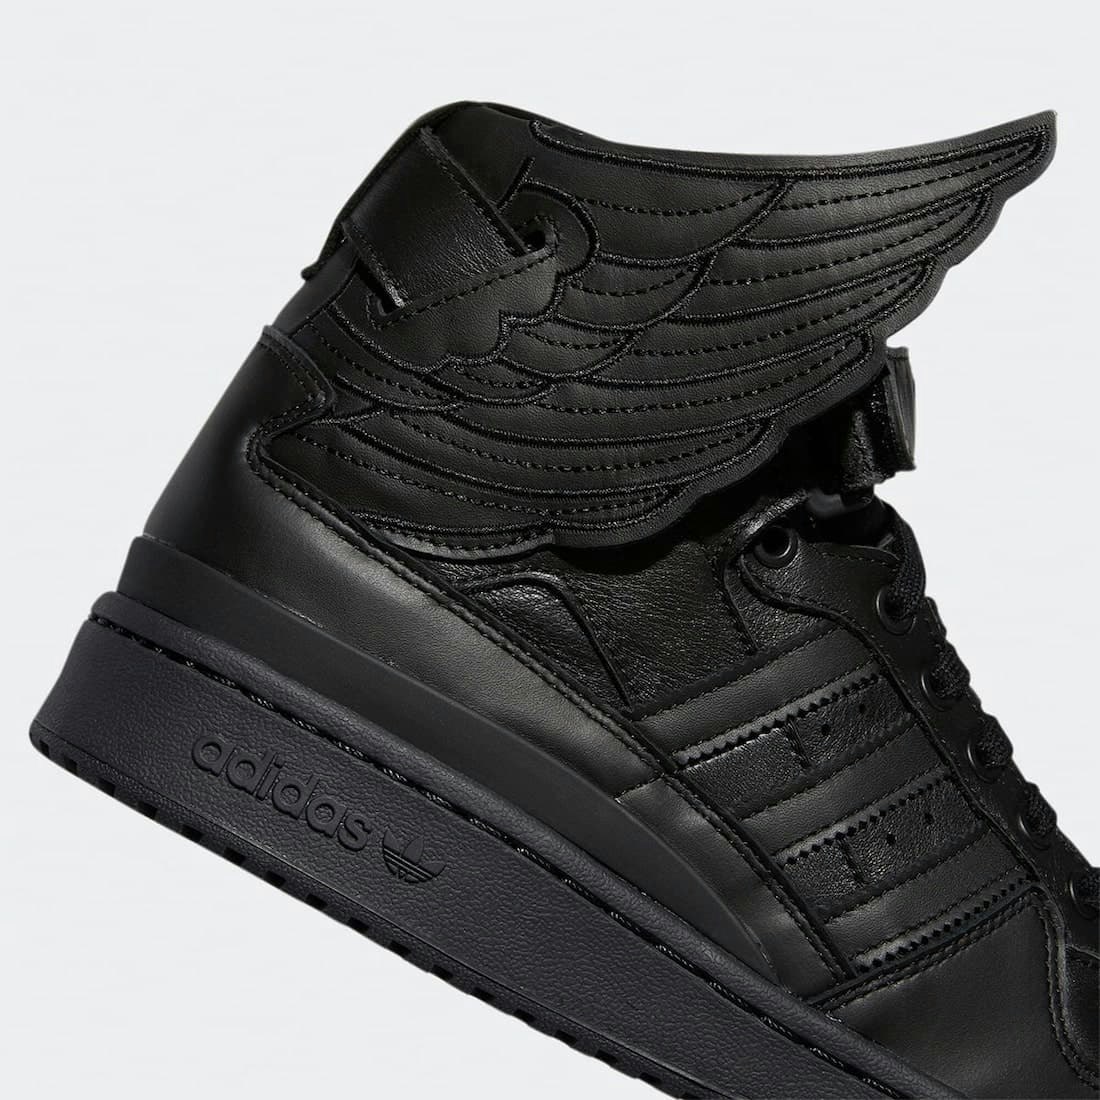 Jeremy Scott x adidas Forum High Wings 4.0 "Core Black"